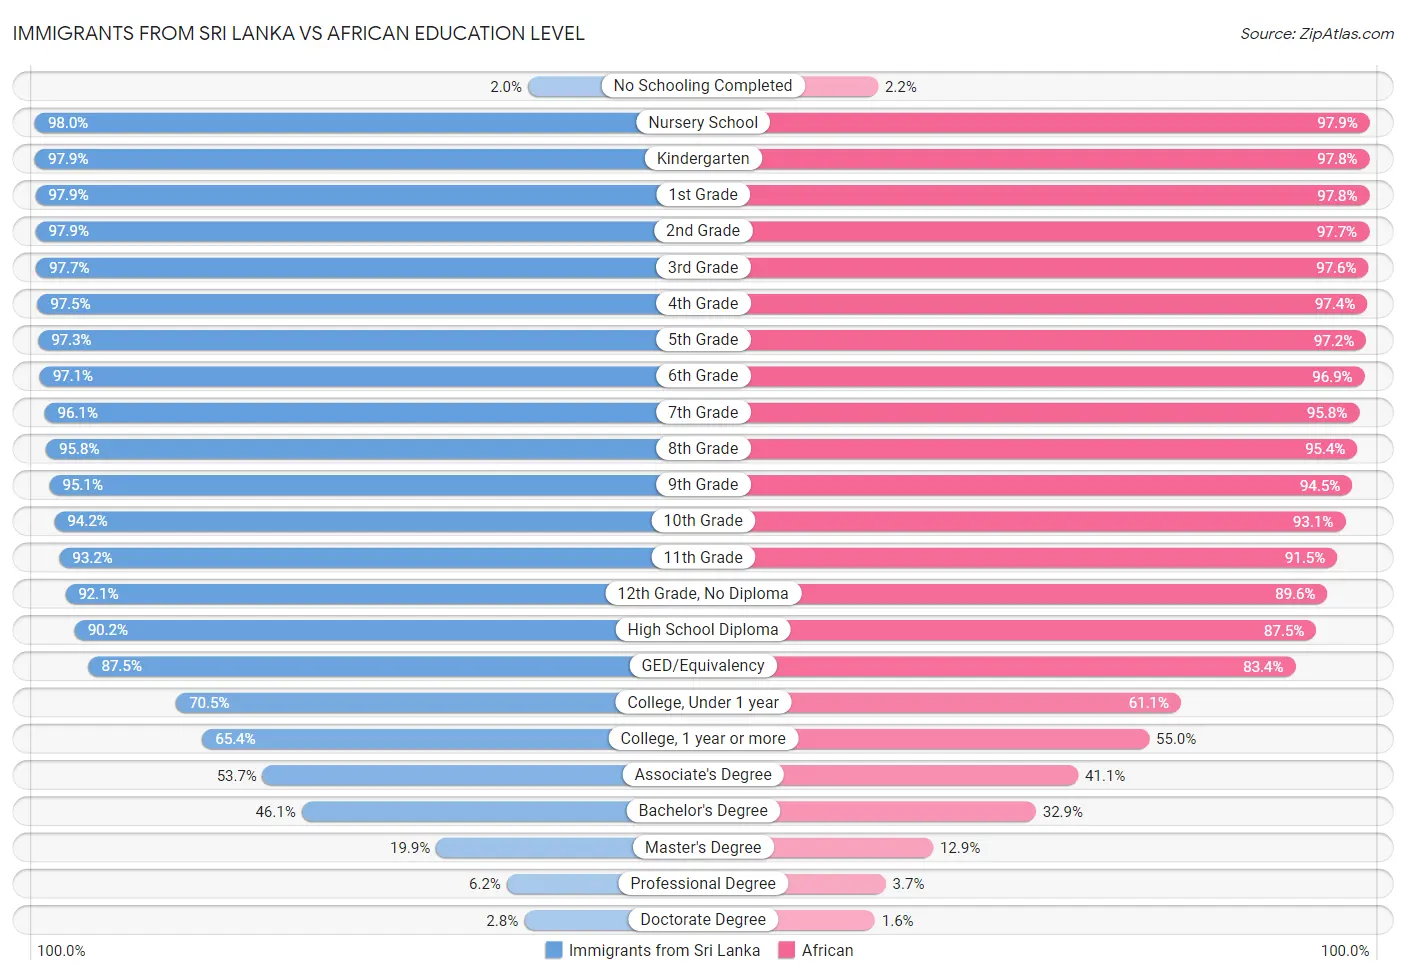 Immigrants from Sri Lanka vs African Education Level